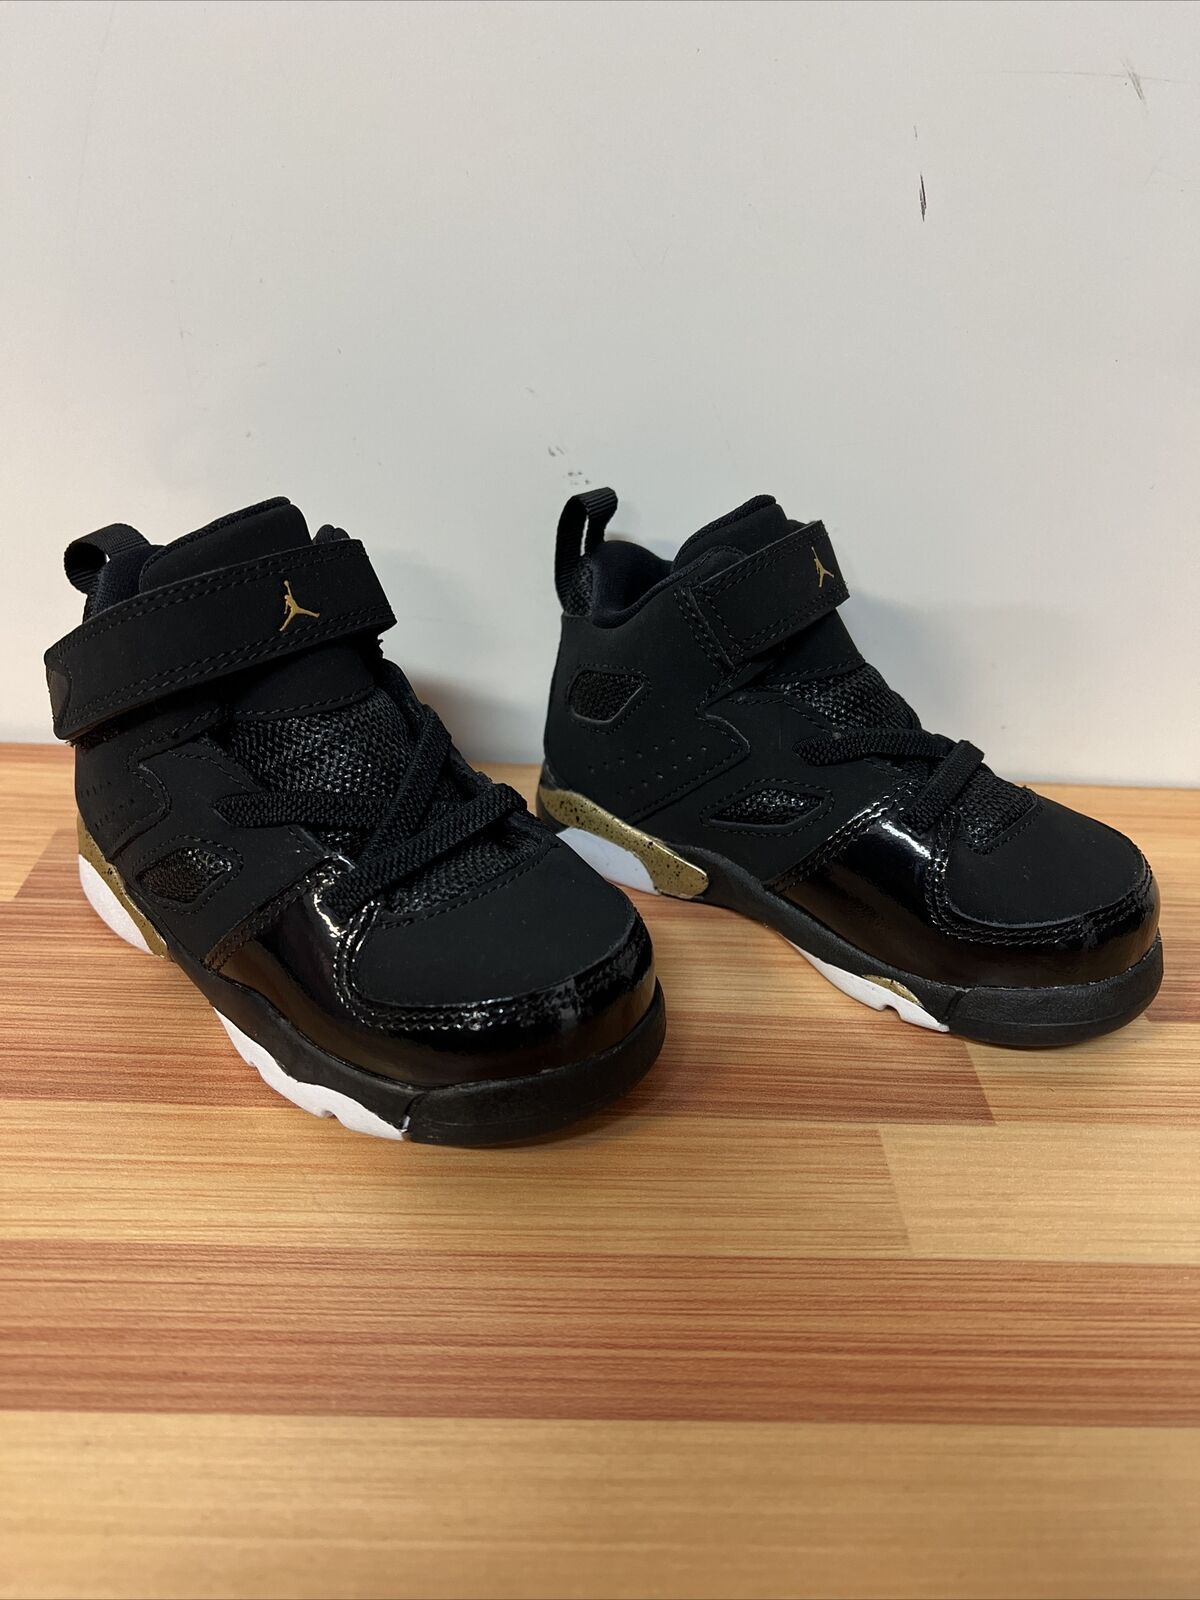 Jordan Flight Club 91 Shoes Black Metallic Gold Sneakers 555330-031 Youth Sz 6C